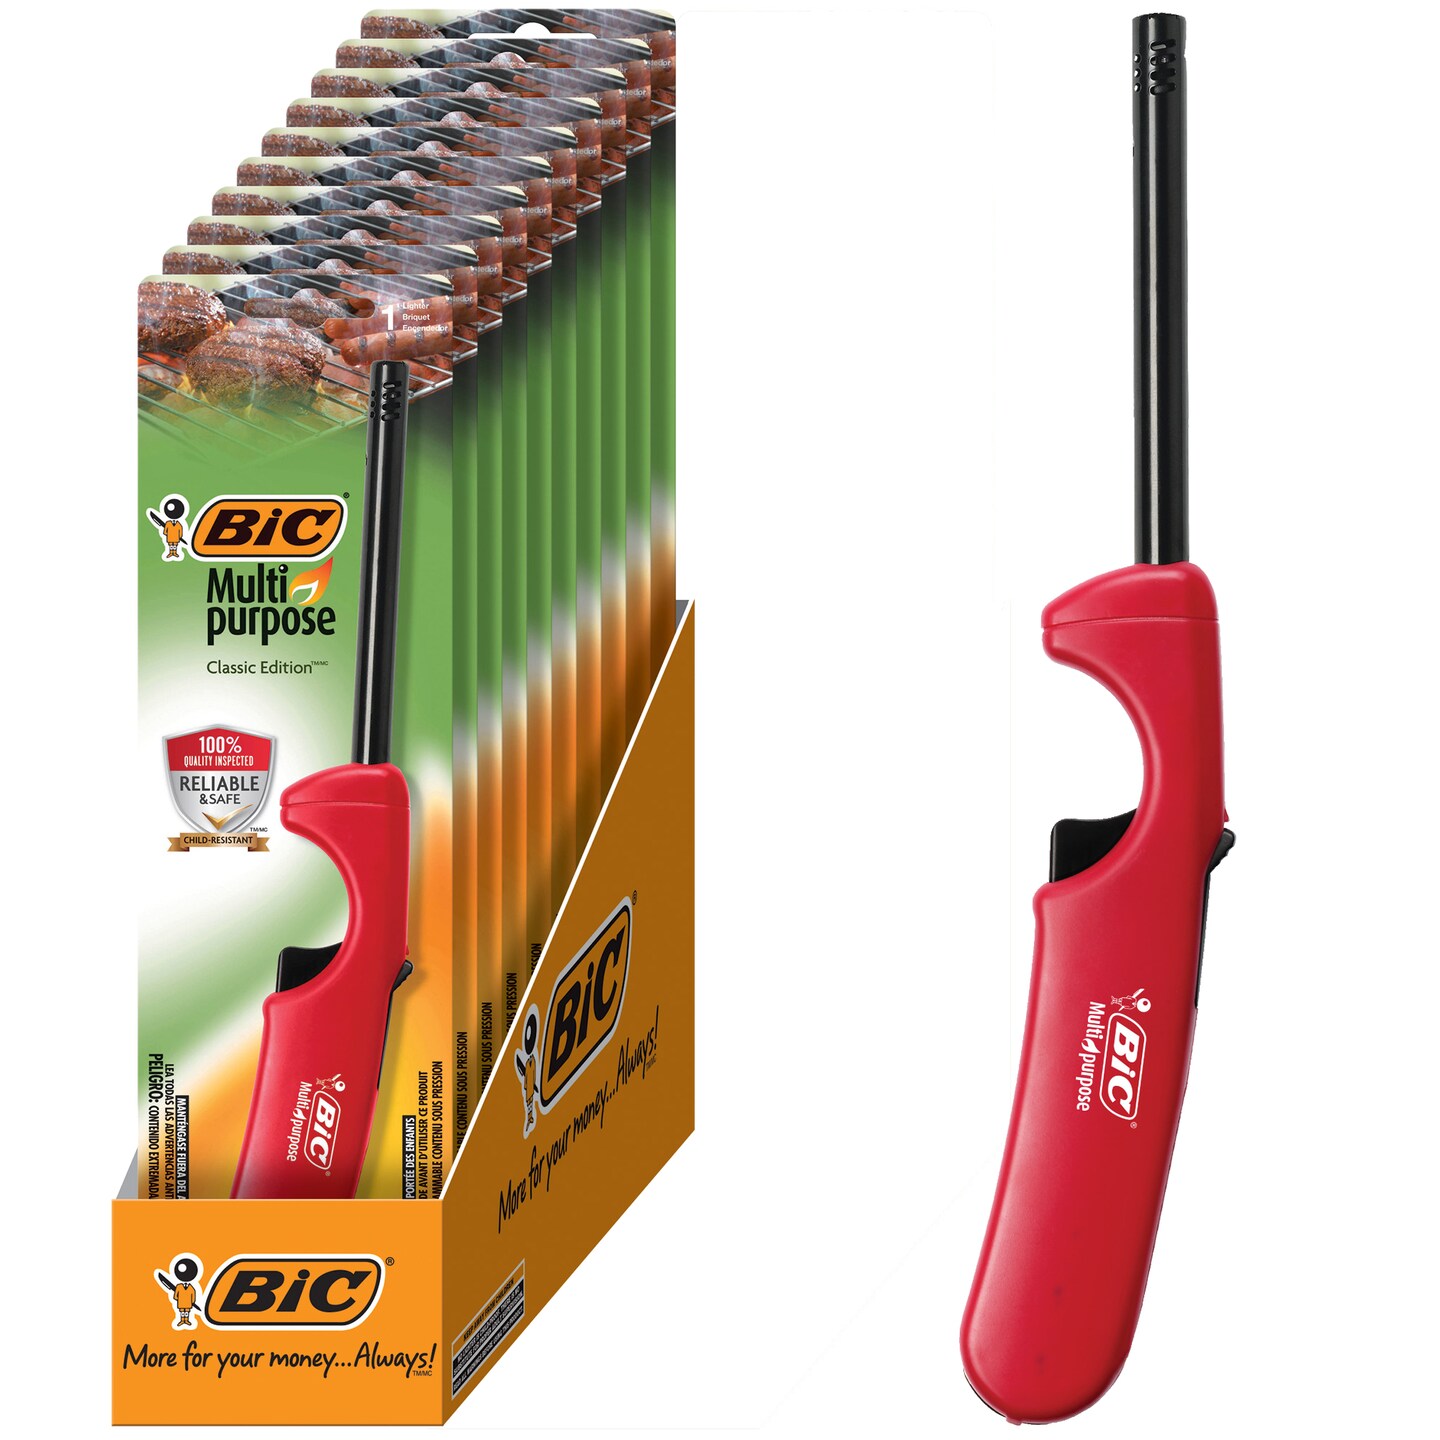 BIC Multi-Purpose Lighter